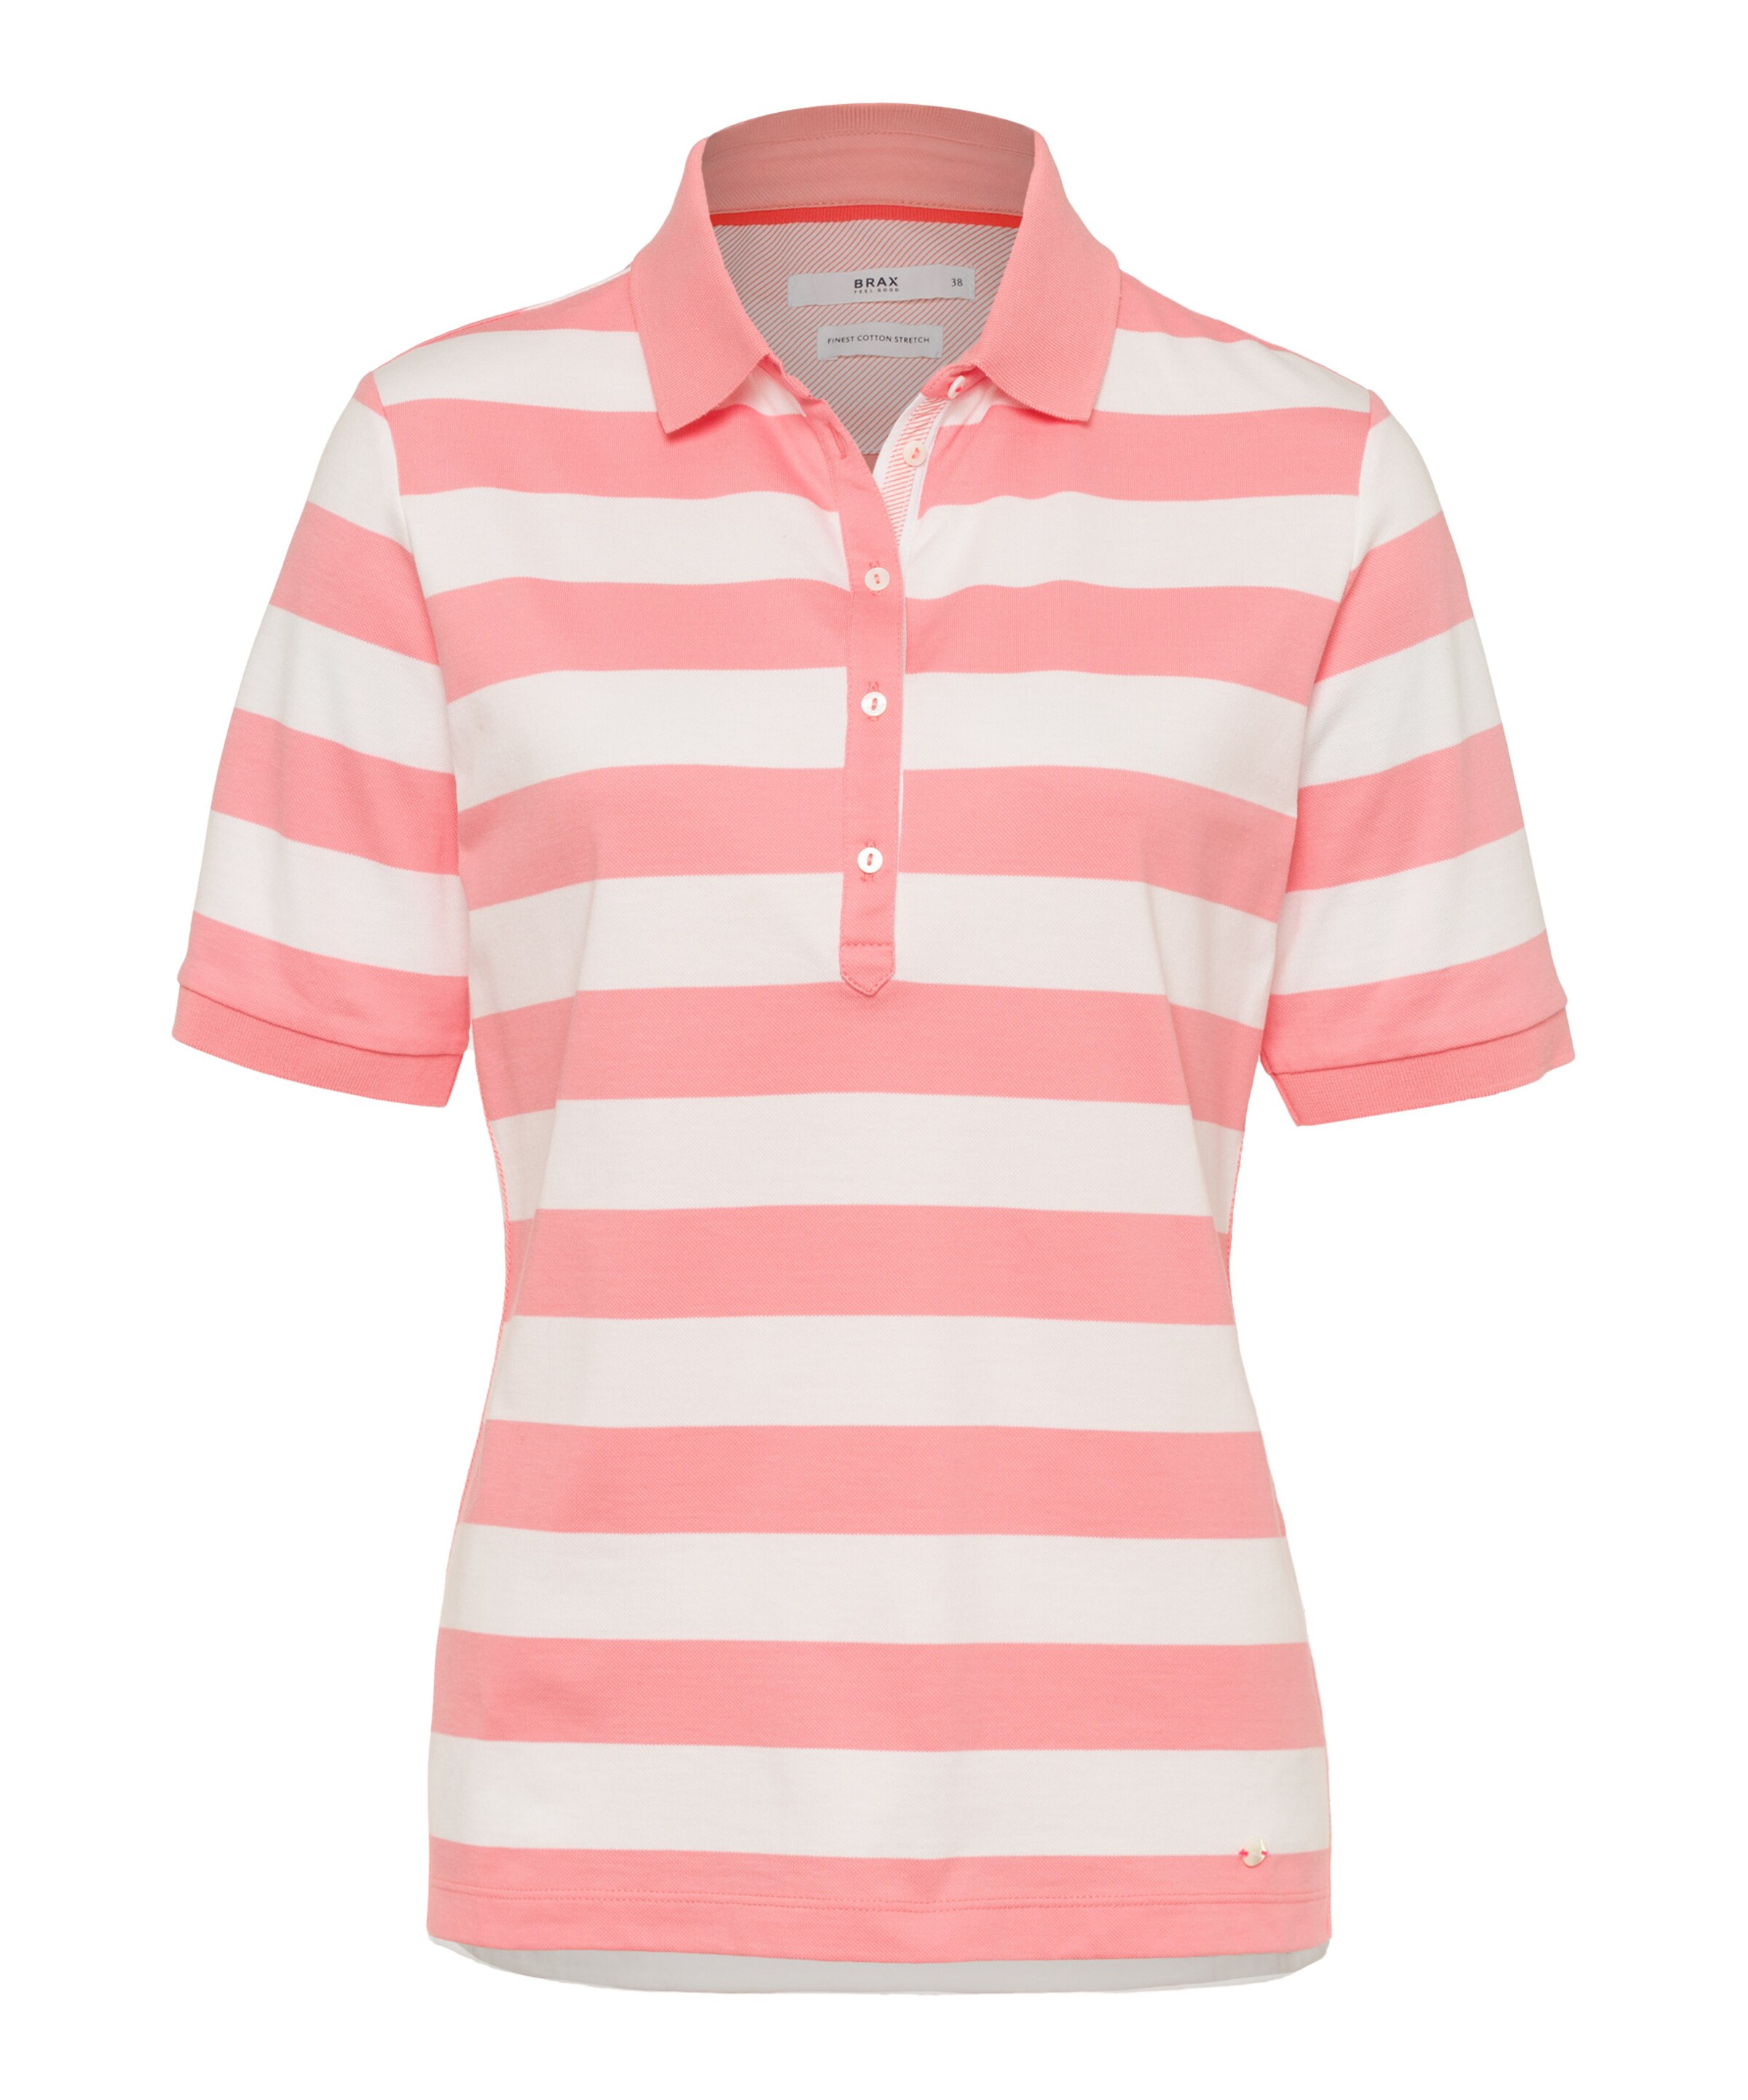 Frauen Shirts & Tops BRAX Shirt 'Cleo' in Pink, Weiß - EB53600